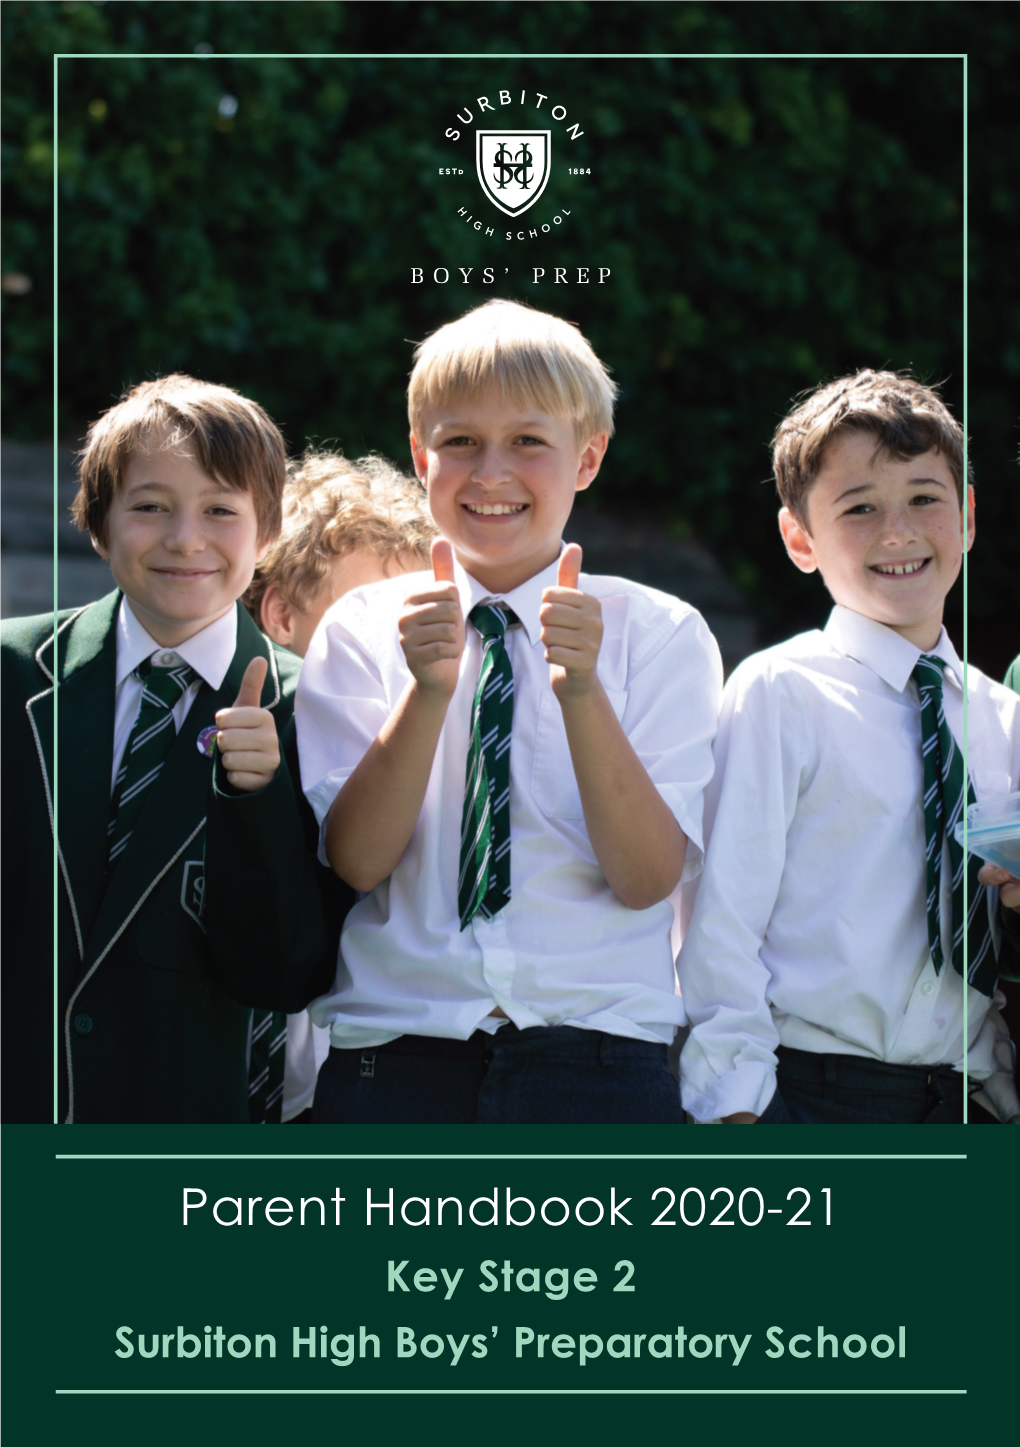 Parent Handbook 2020-21 Key Stage 2 Surbiton High Boys’ Preparatory School